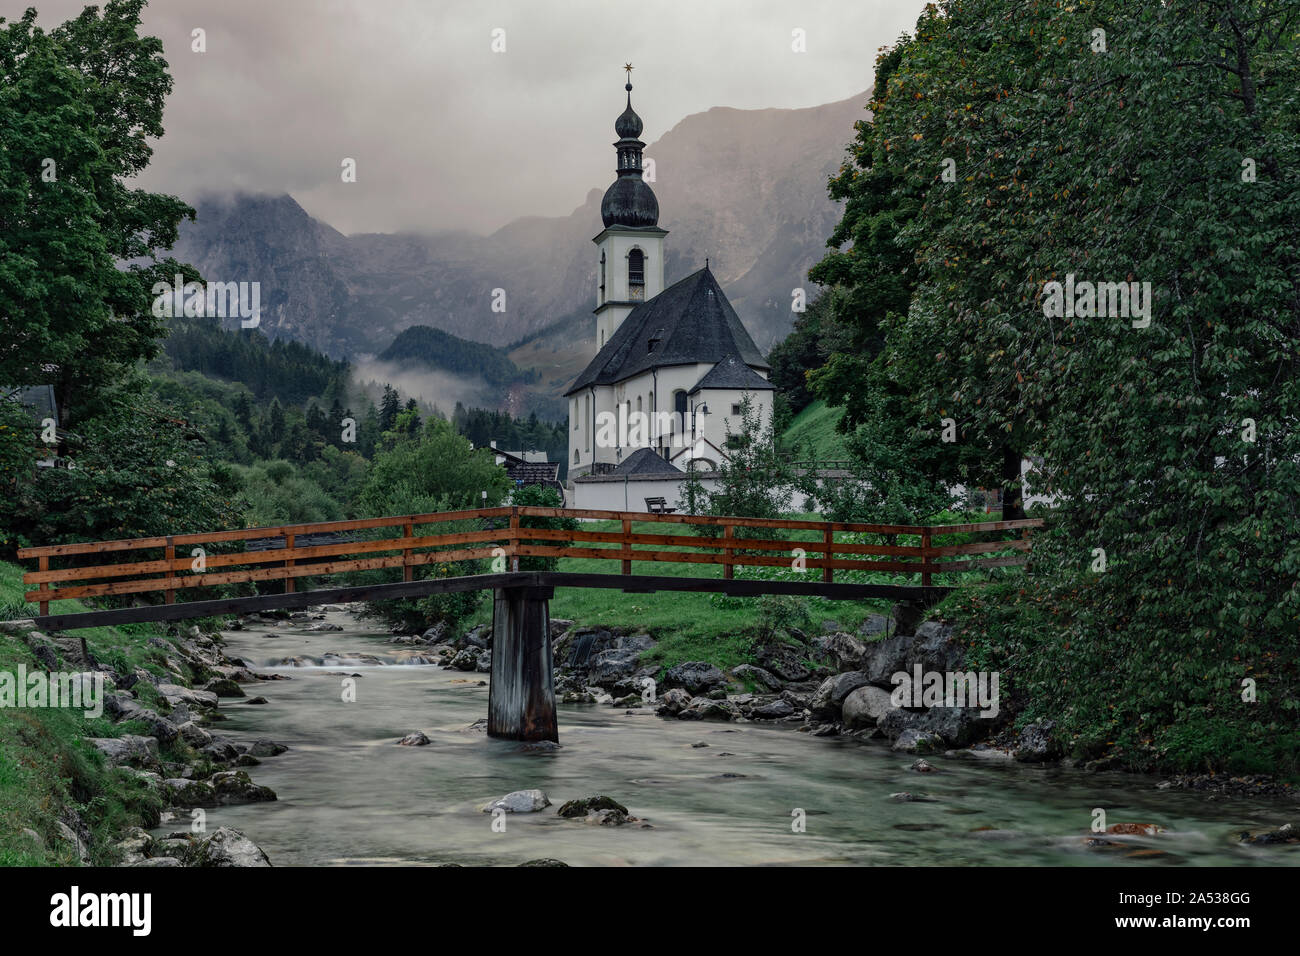 Ramsau bei Berchtesgaden, Bavaria, Germany, Europe Stock Photo